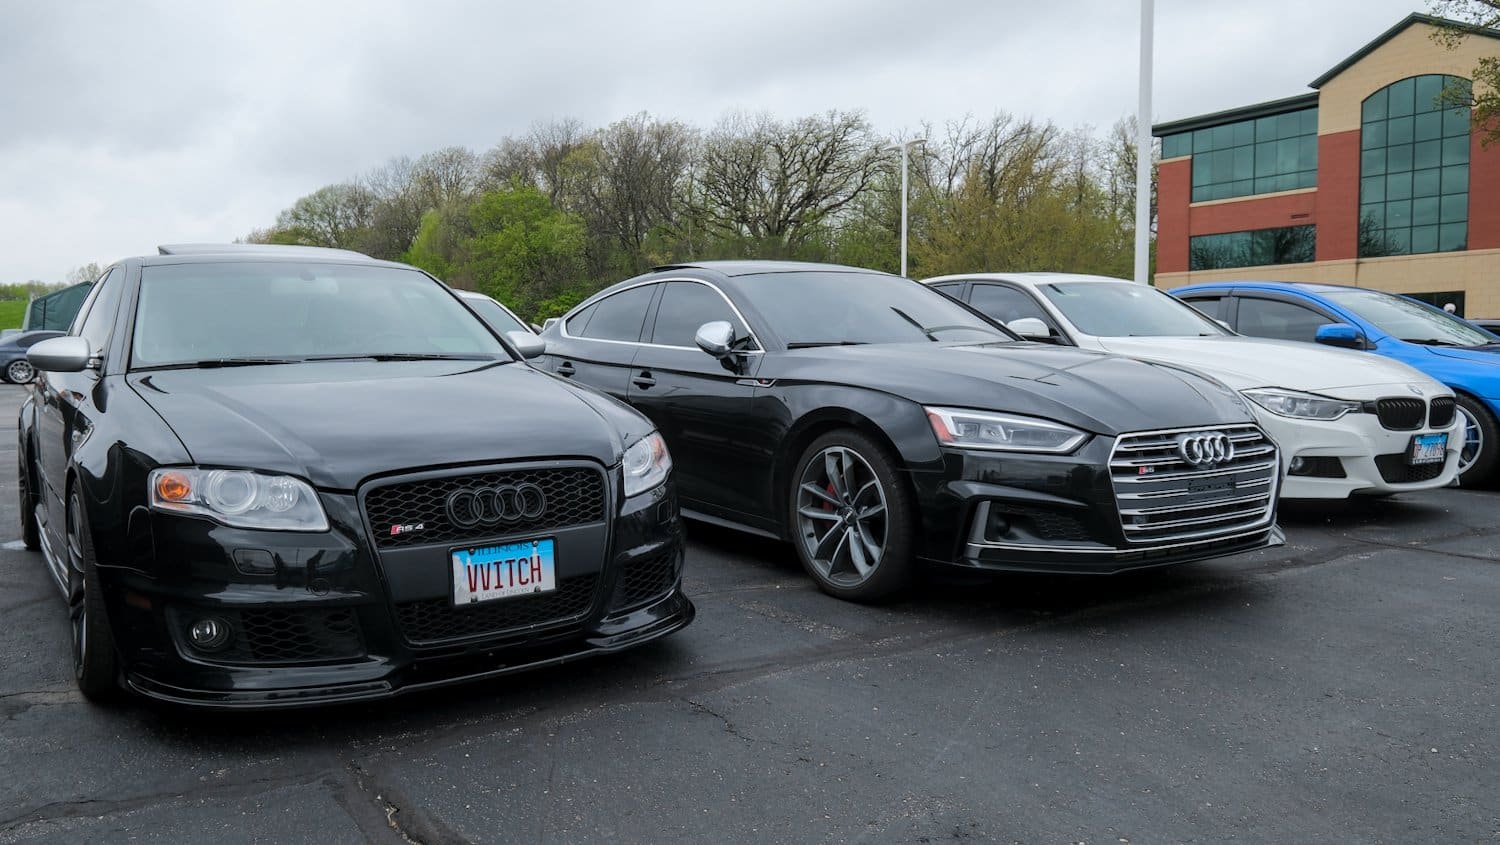 Couple of Audi's.